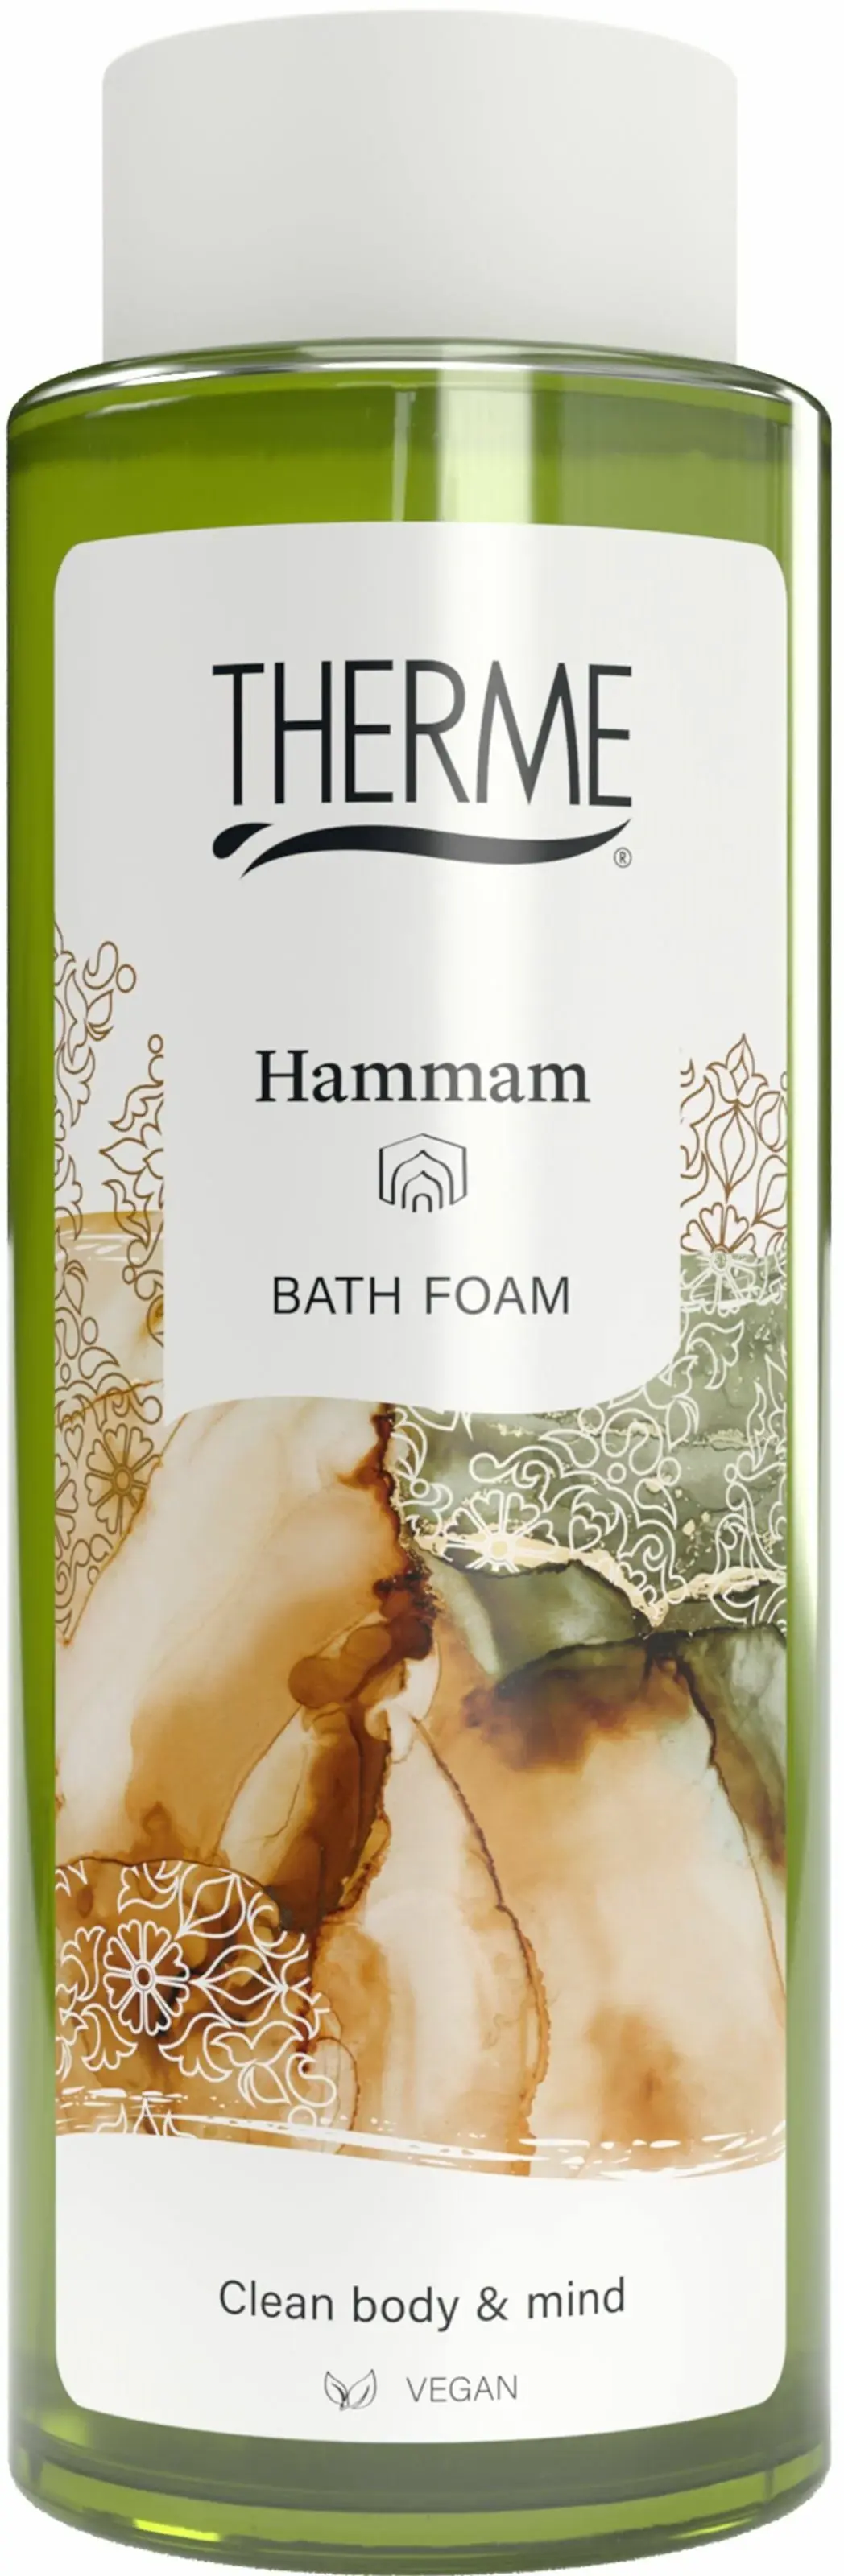 Therme Relaxing Foam Bath Hammam